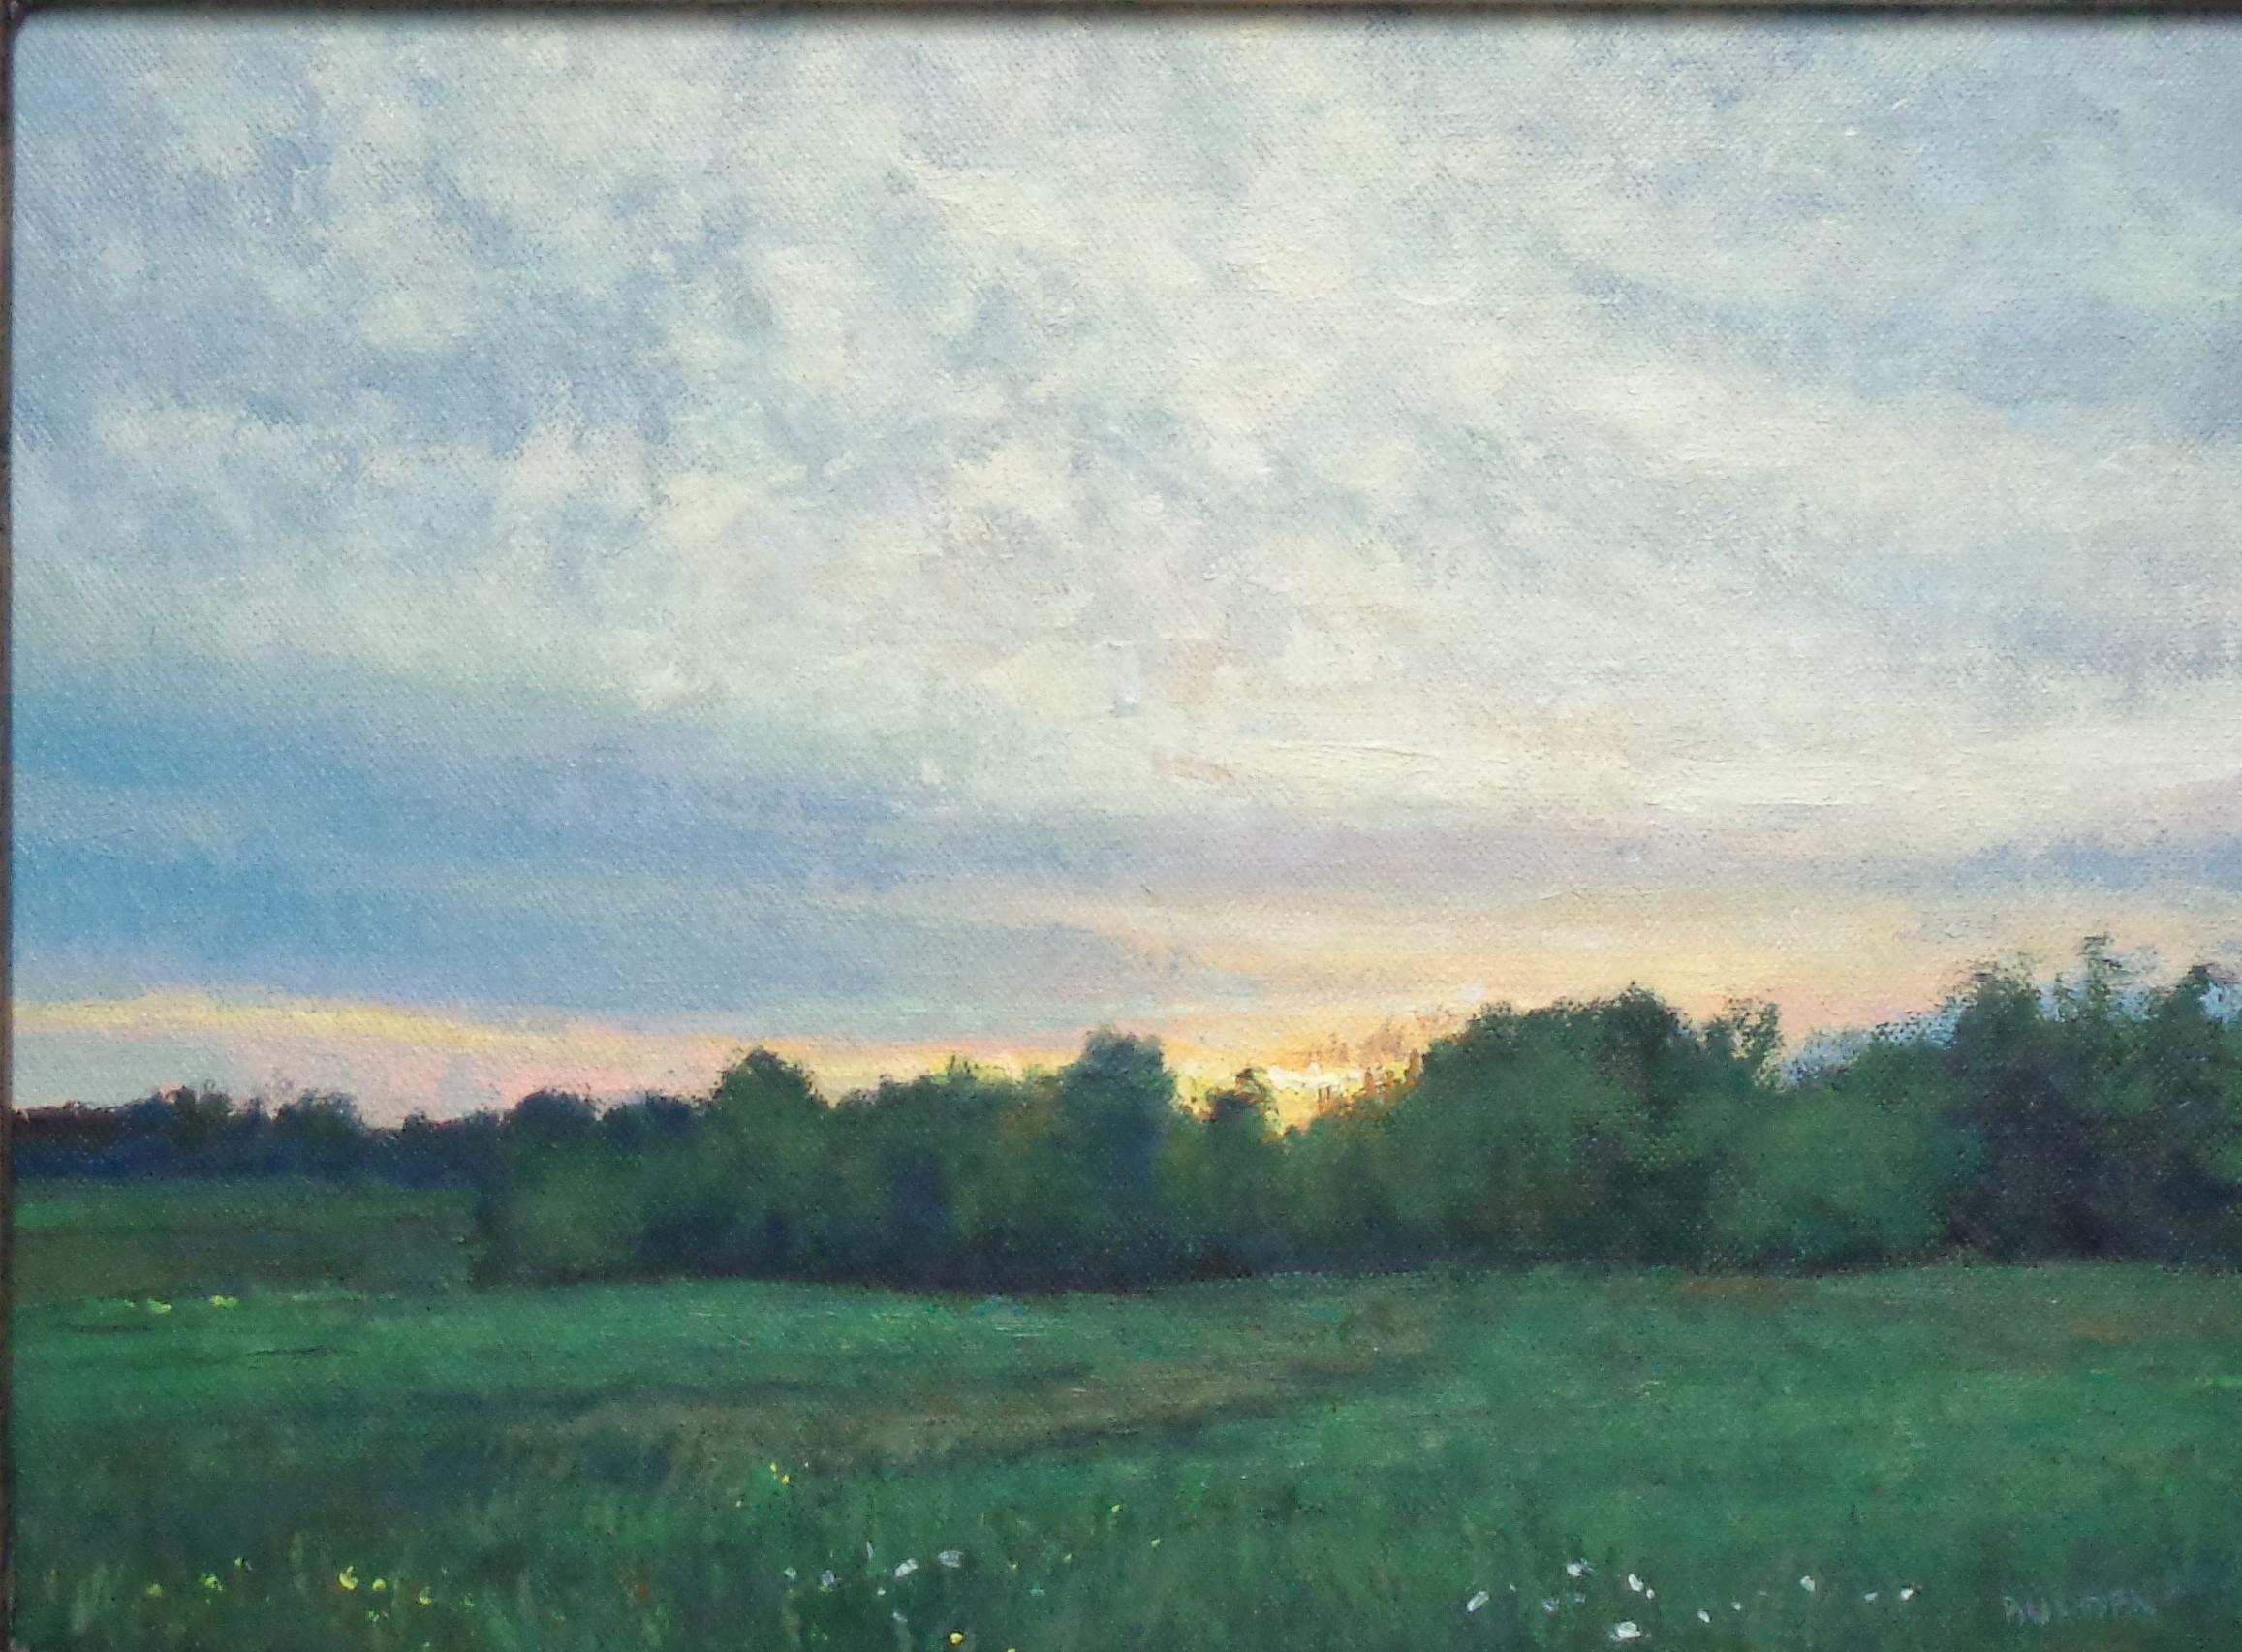  Impressionistic sky Landscape Oil Painting Michael Budden Sky Cloud Study For Sale 1